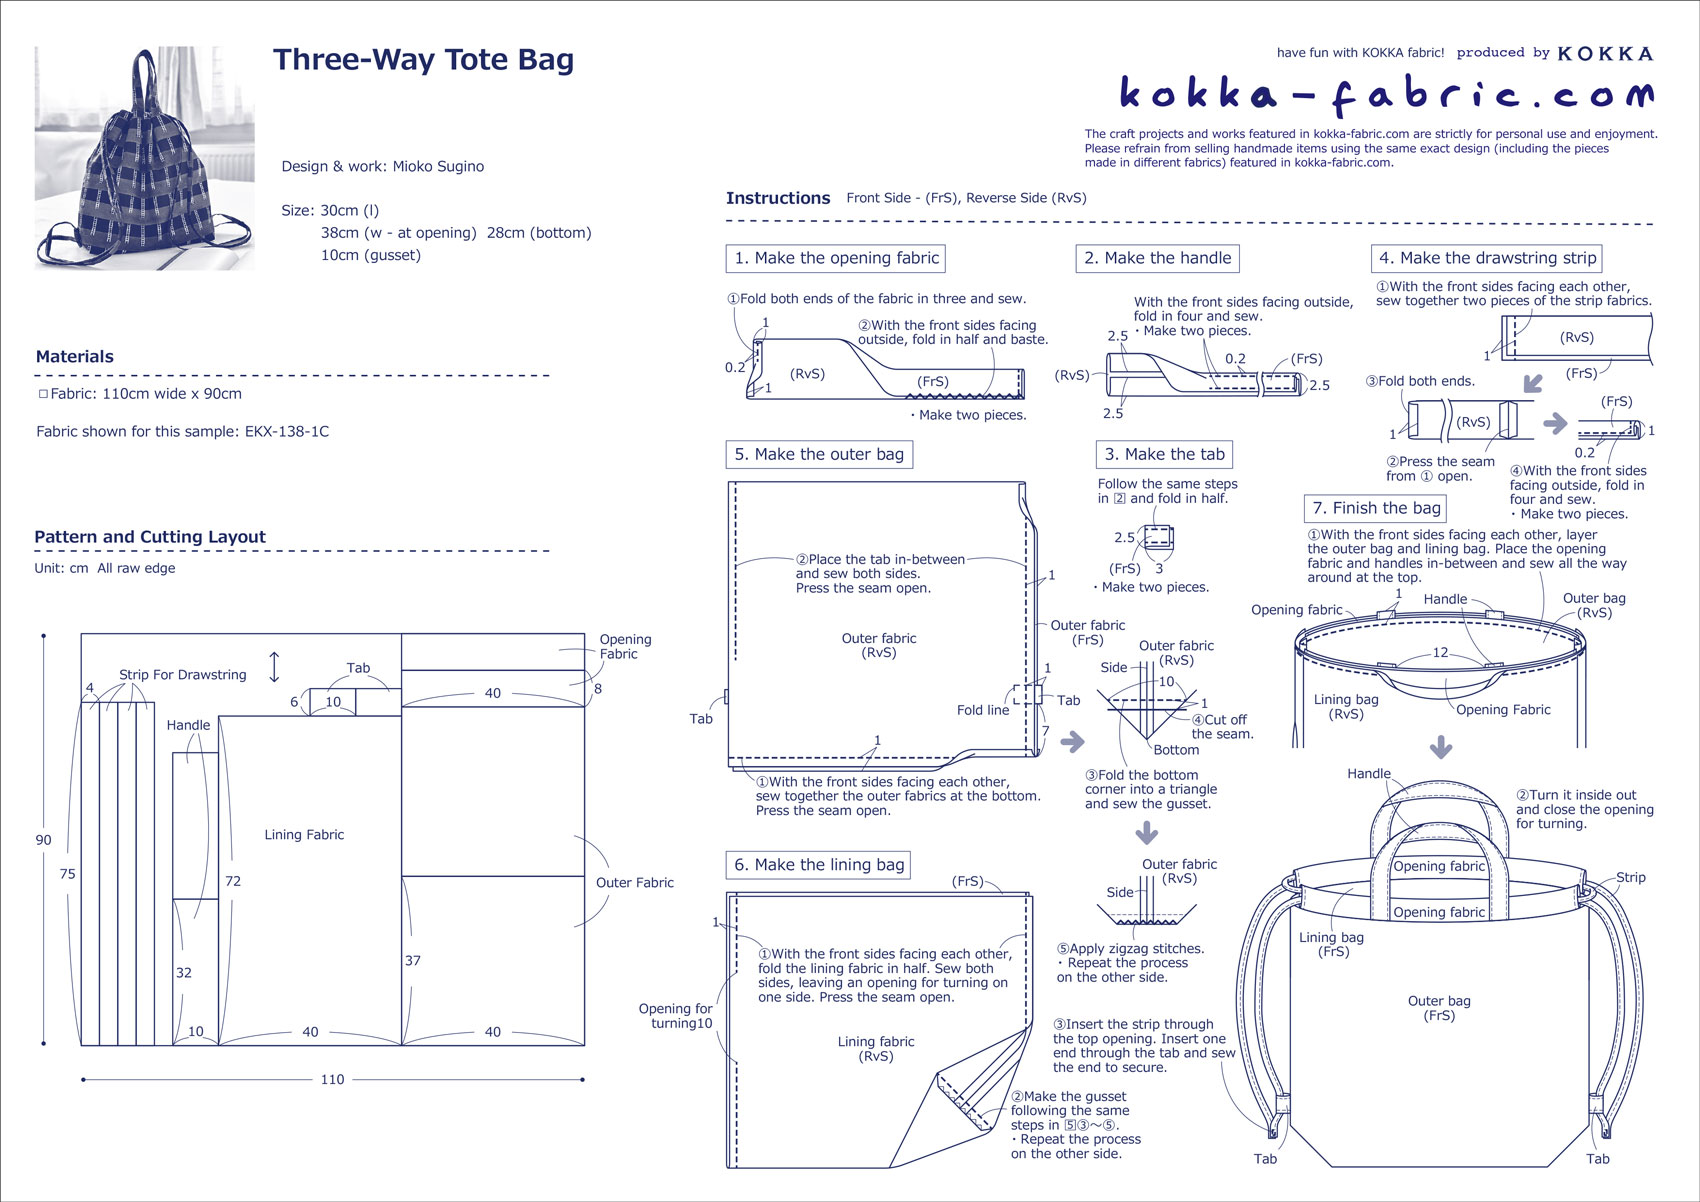 Three-Way Tote Bag – Free Sewing Tutorial | KOKKA-FABRIC.COM | have fun ...